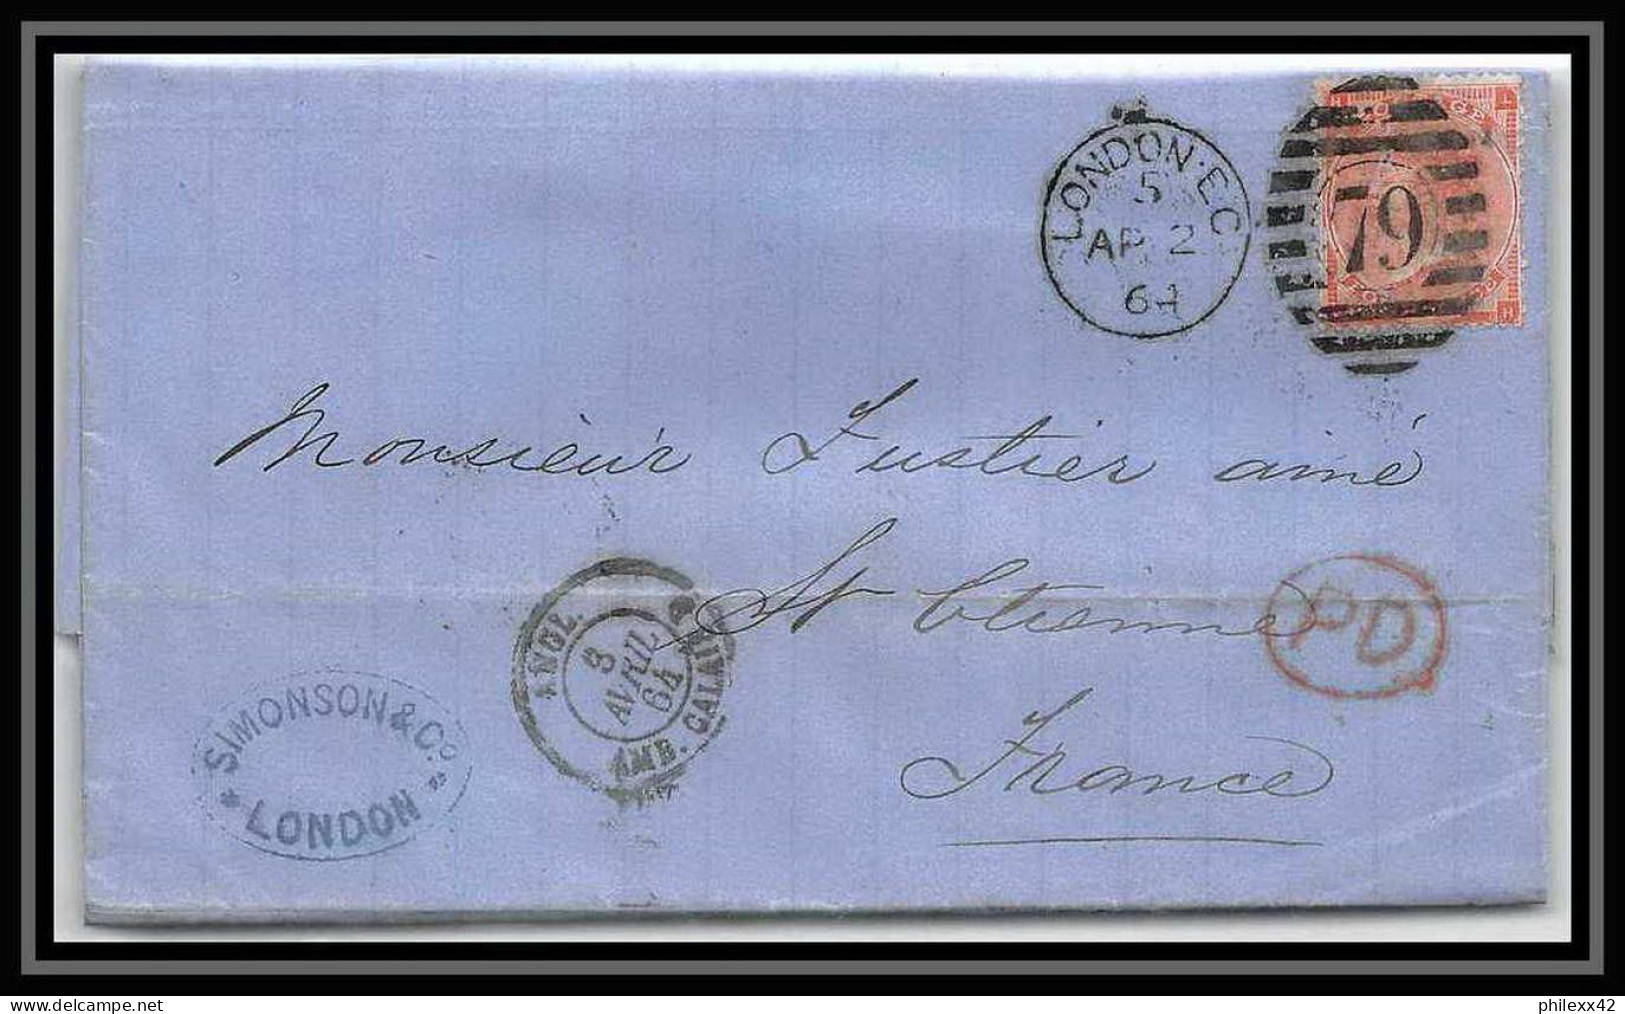 35751 N°32 Victoria 4p Red London St Etienne France 1864 Cachet 79 Lettre Cover Grande Bretagne England - Briefe U. Dokumente